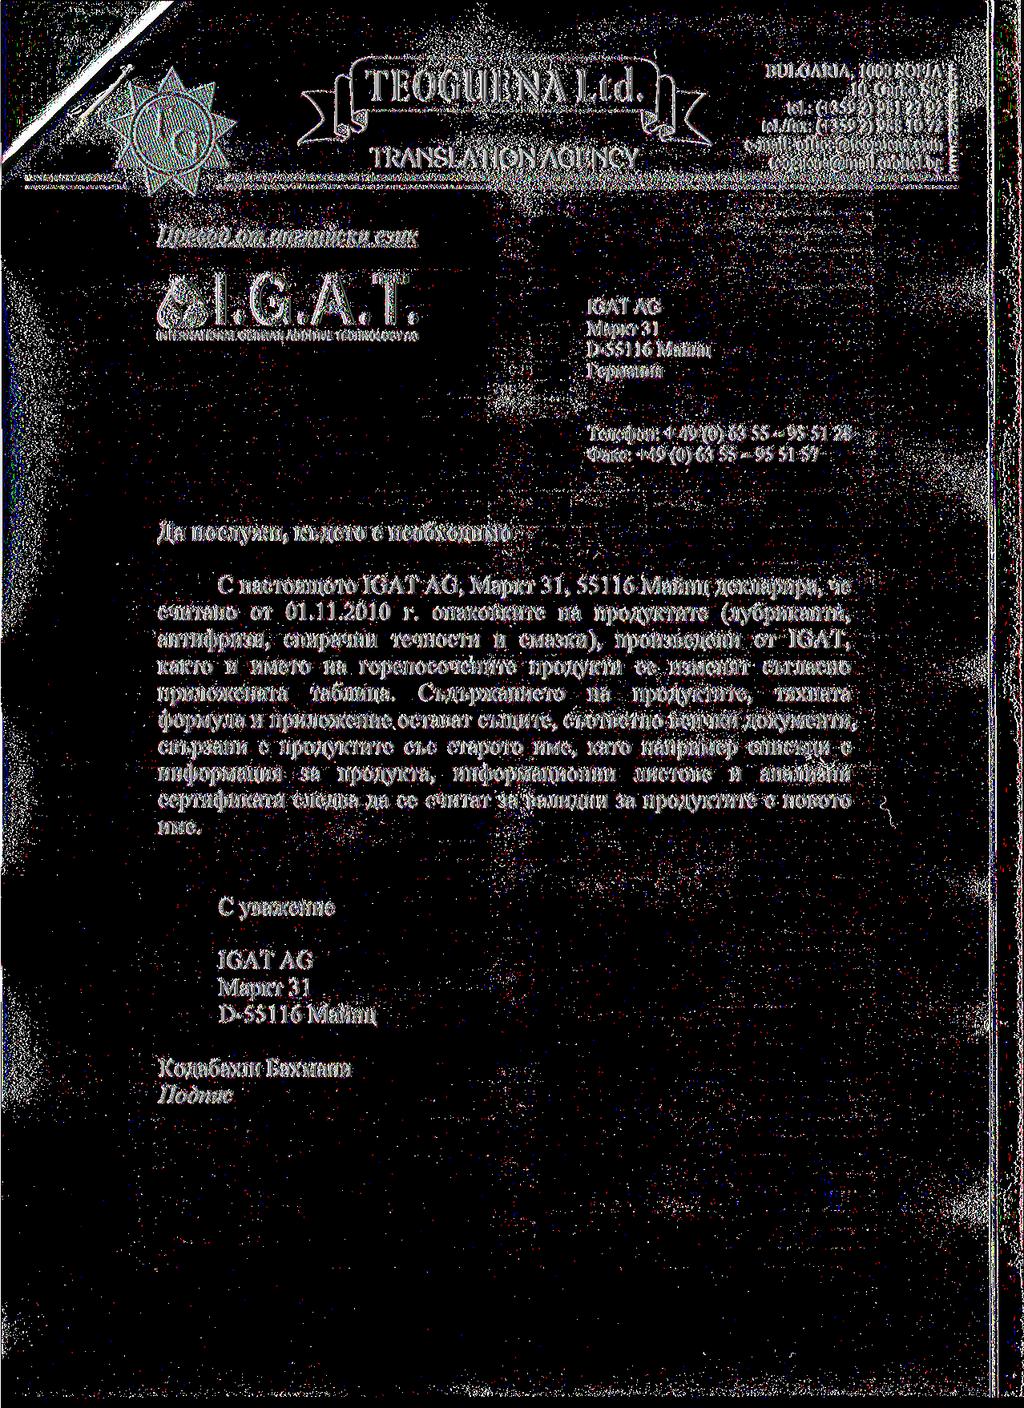 TEOGUENA Ltd TRANSLATION AGENCY BULGARIA, 1000 SOFIA 10, Gurko Str. 3 tel.: (+359 2) 981 27 92 tel./fax: (+359 2) 988 10 72 e-mail: office@teoguena.com ^ teoguena@mail.orbitel.